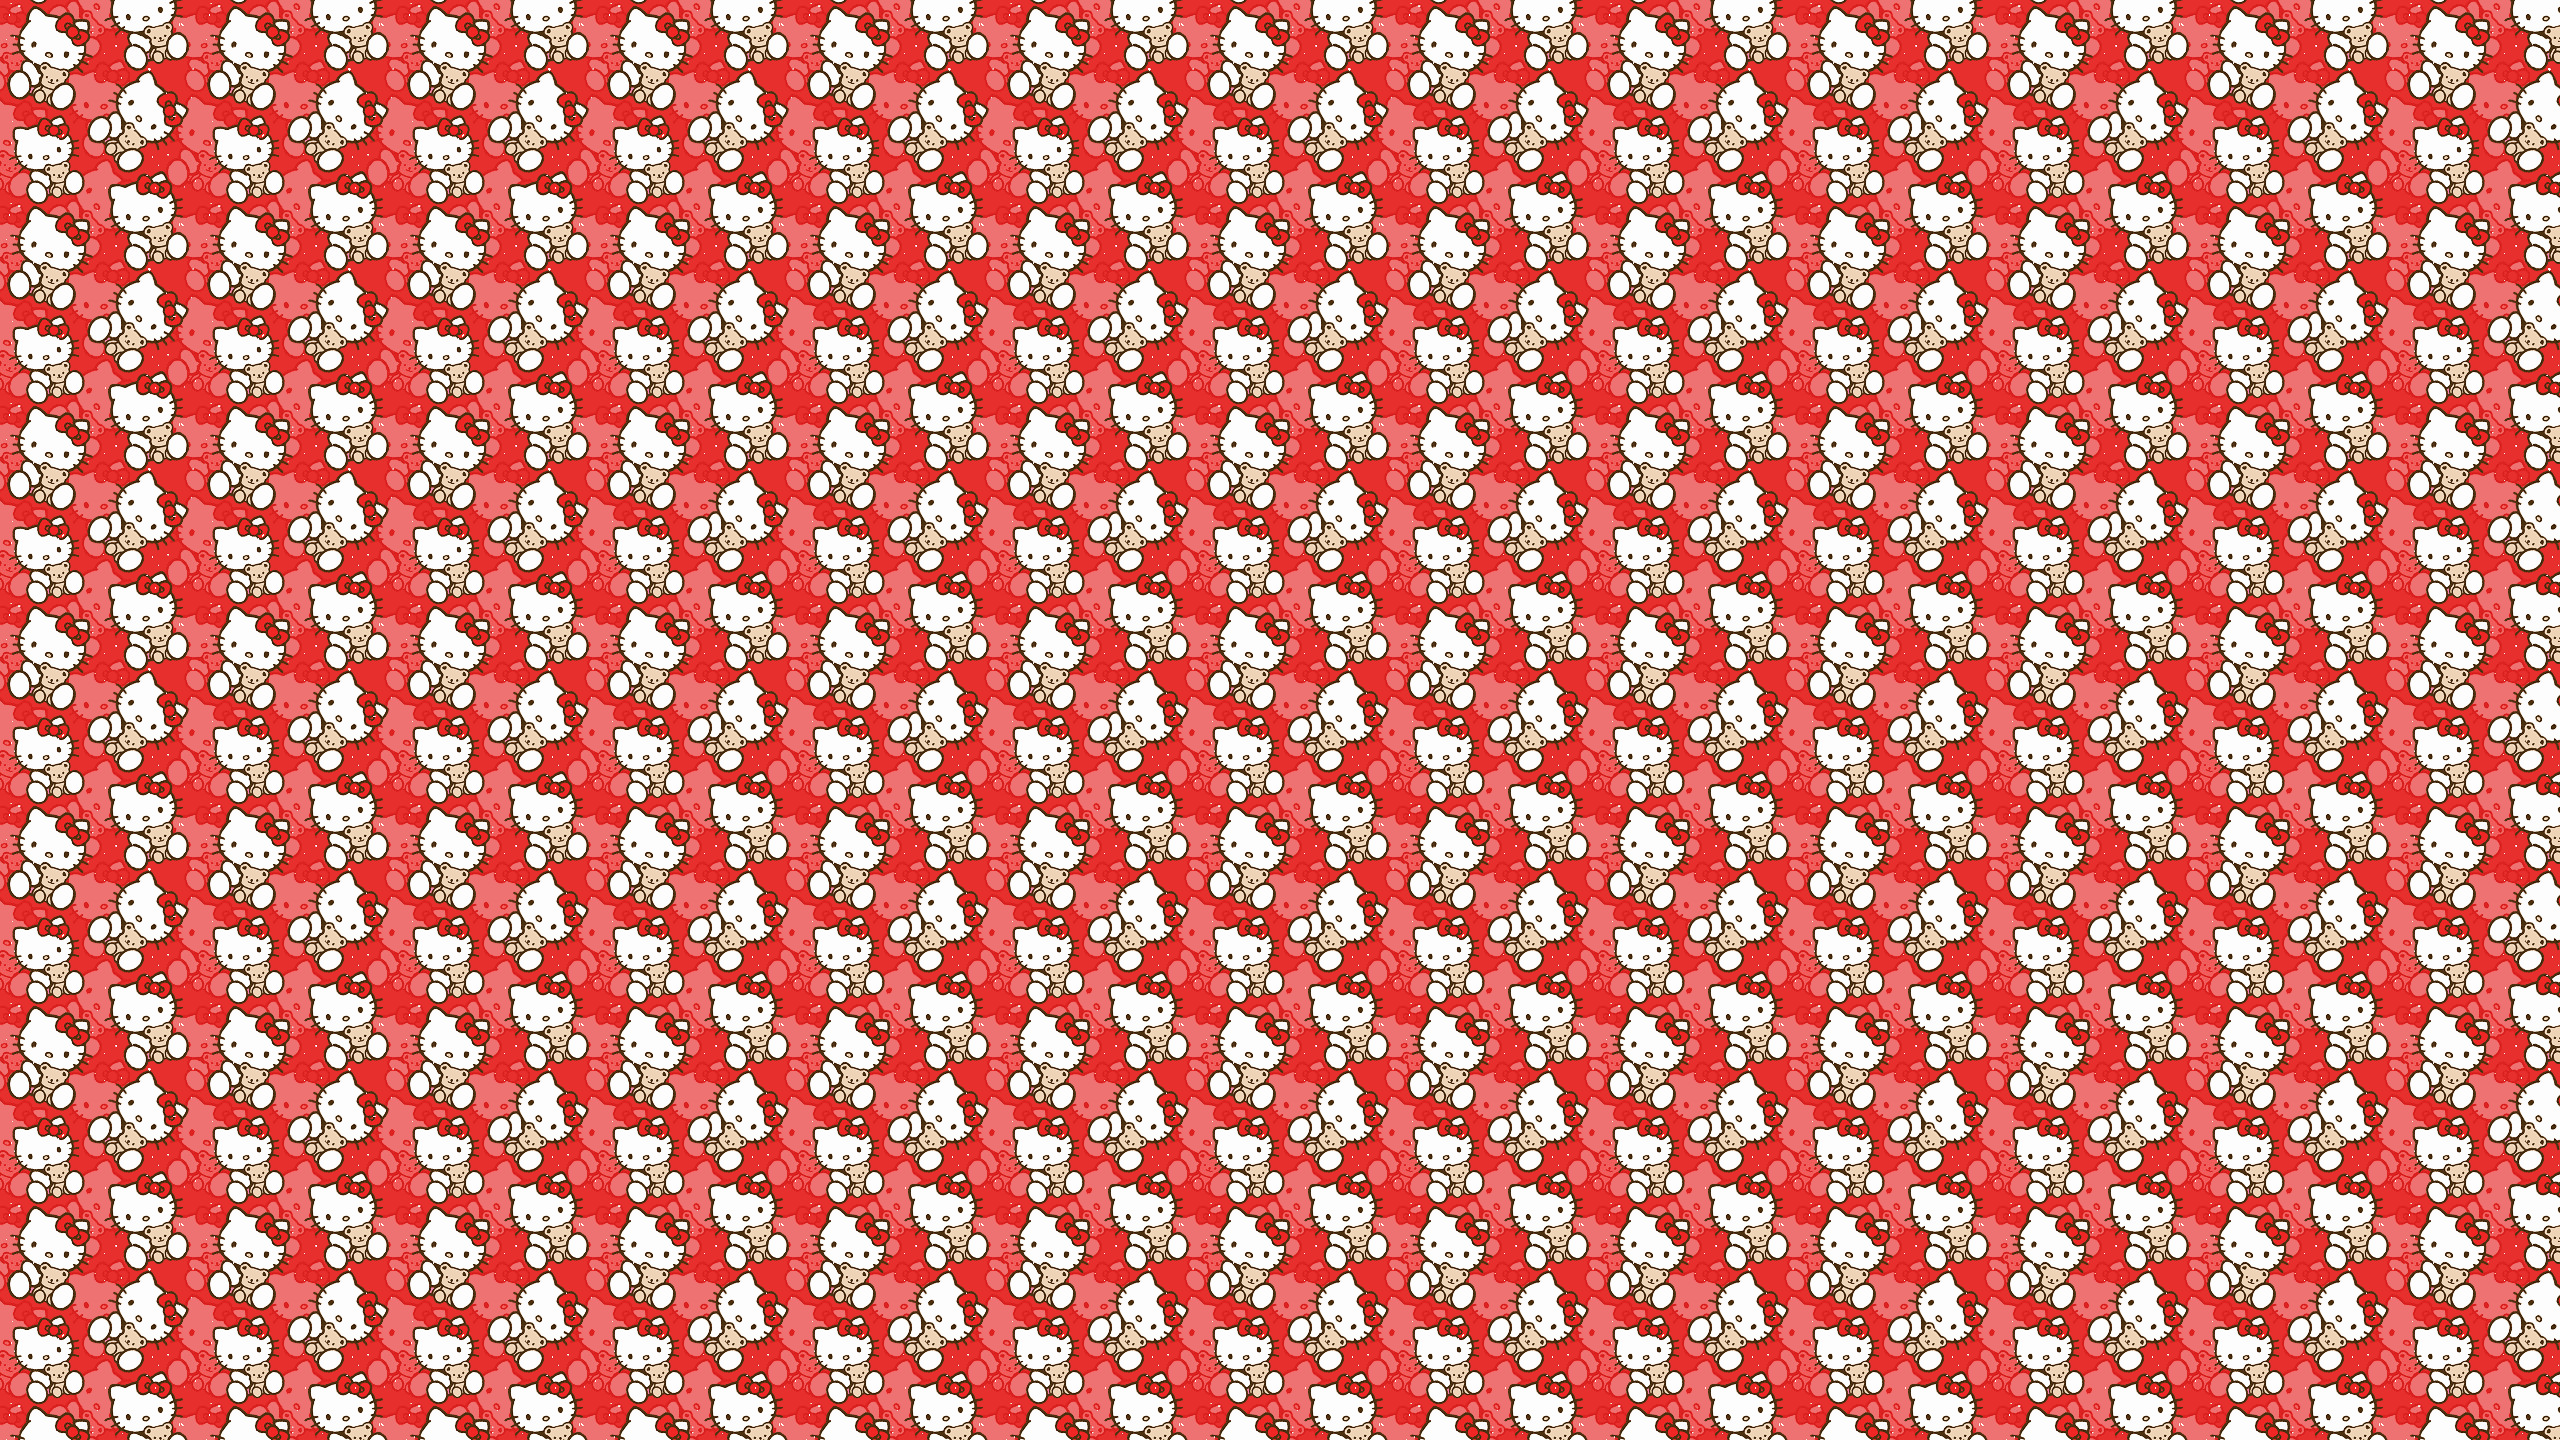 2560x1440 ... Background by ibjennyjenny on DeviantArt Hello Kitty pattern | fundos |  Pinterest | Hello kitty, Kitty and .